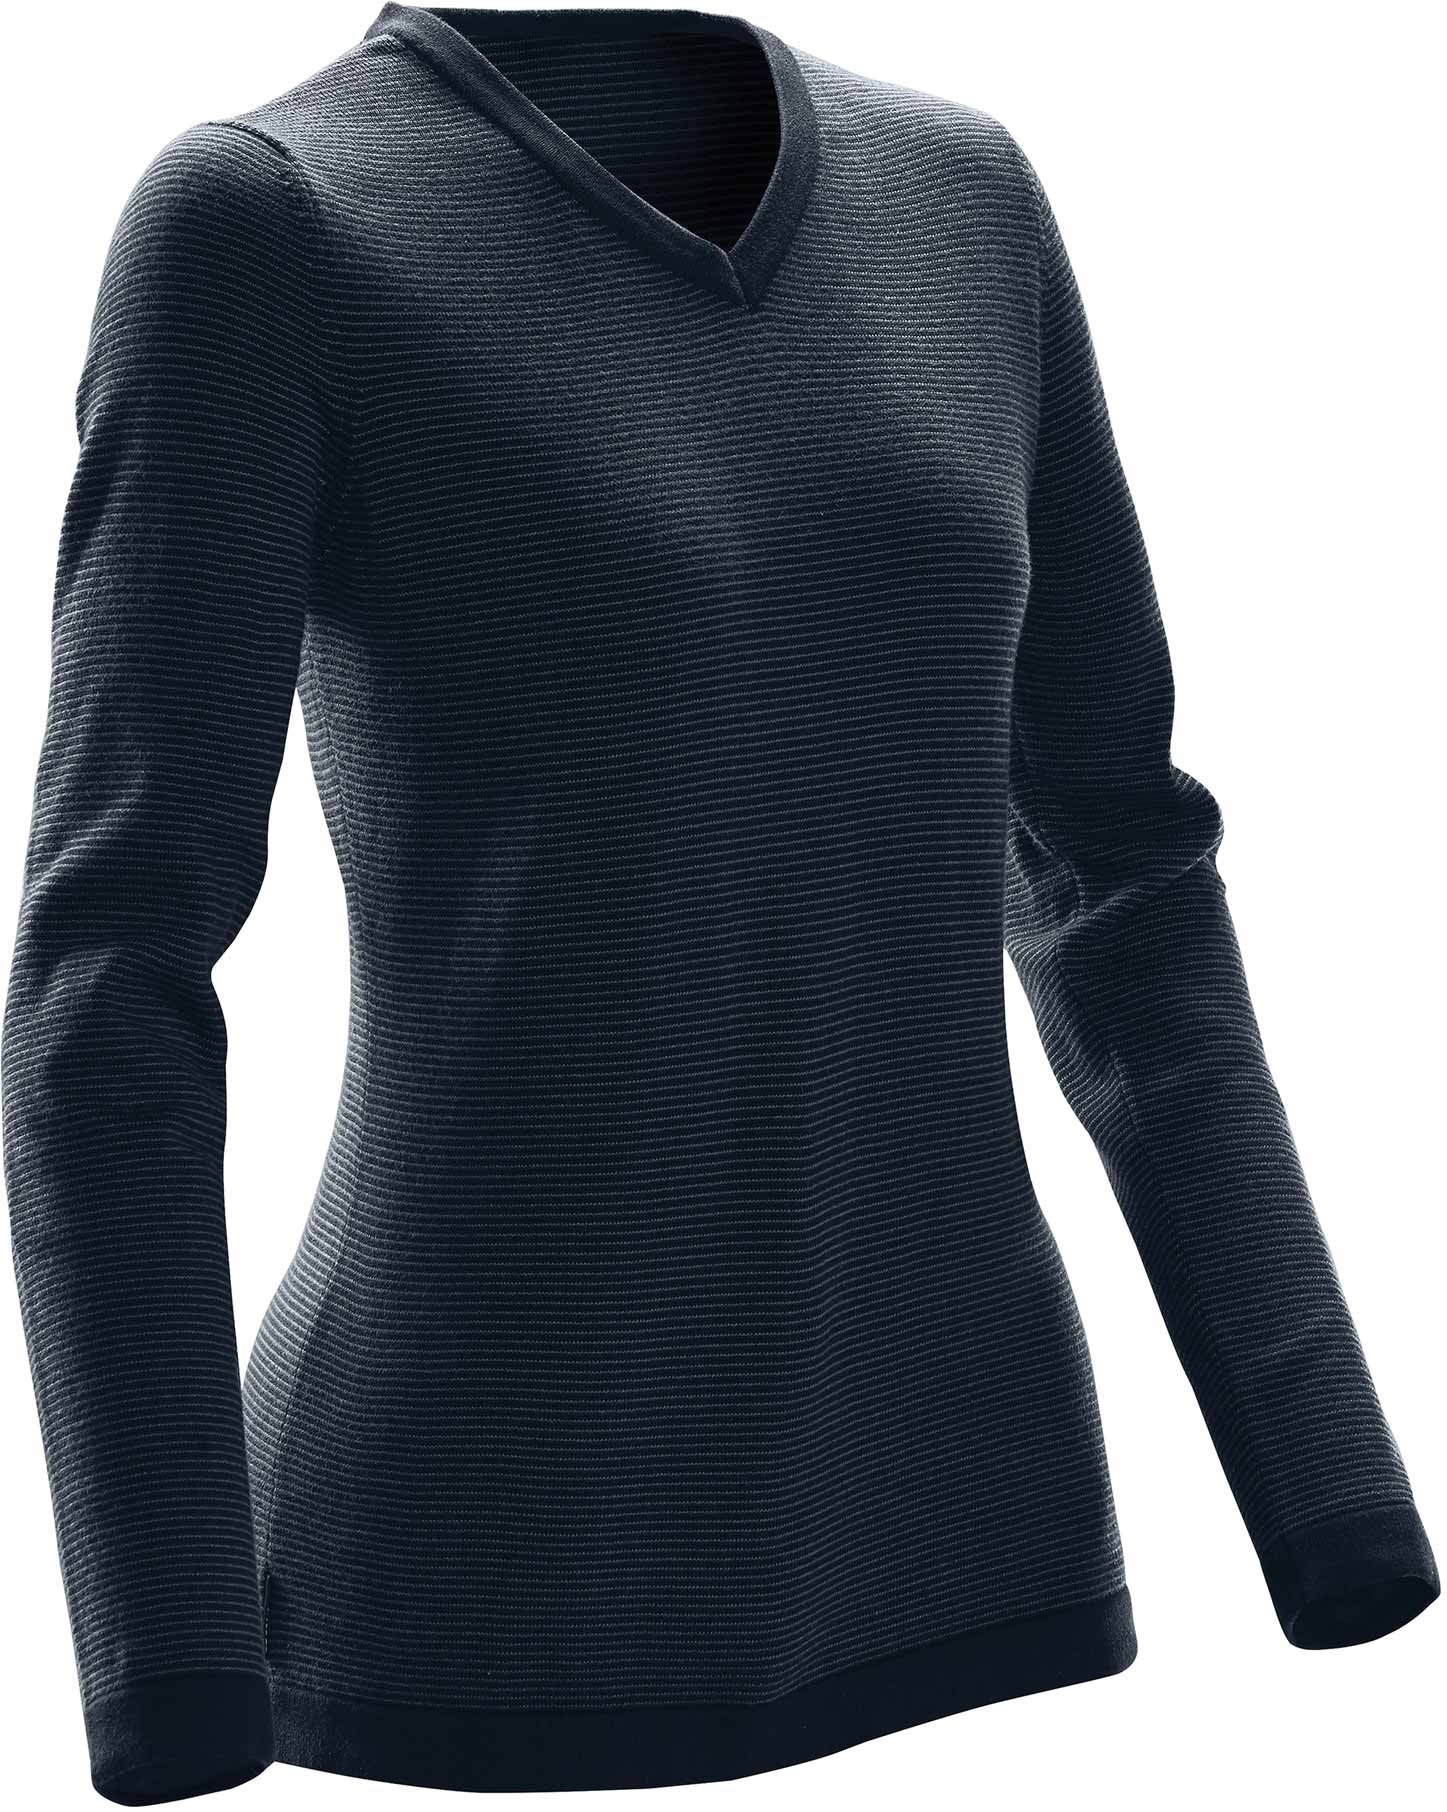 Stormtech STC-1W - Women's Horizon Sweater